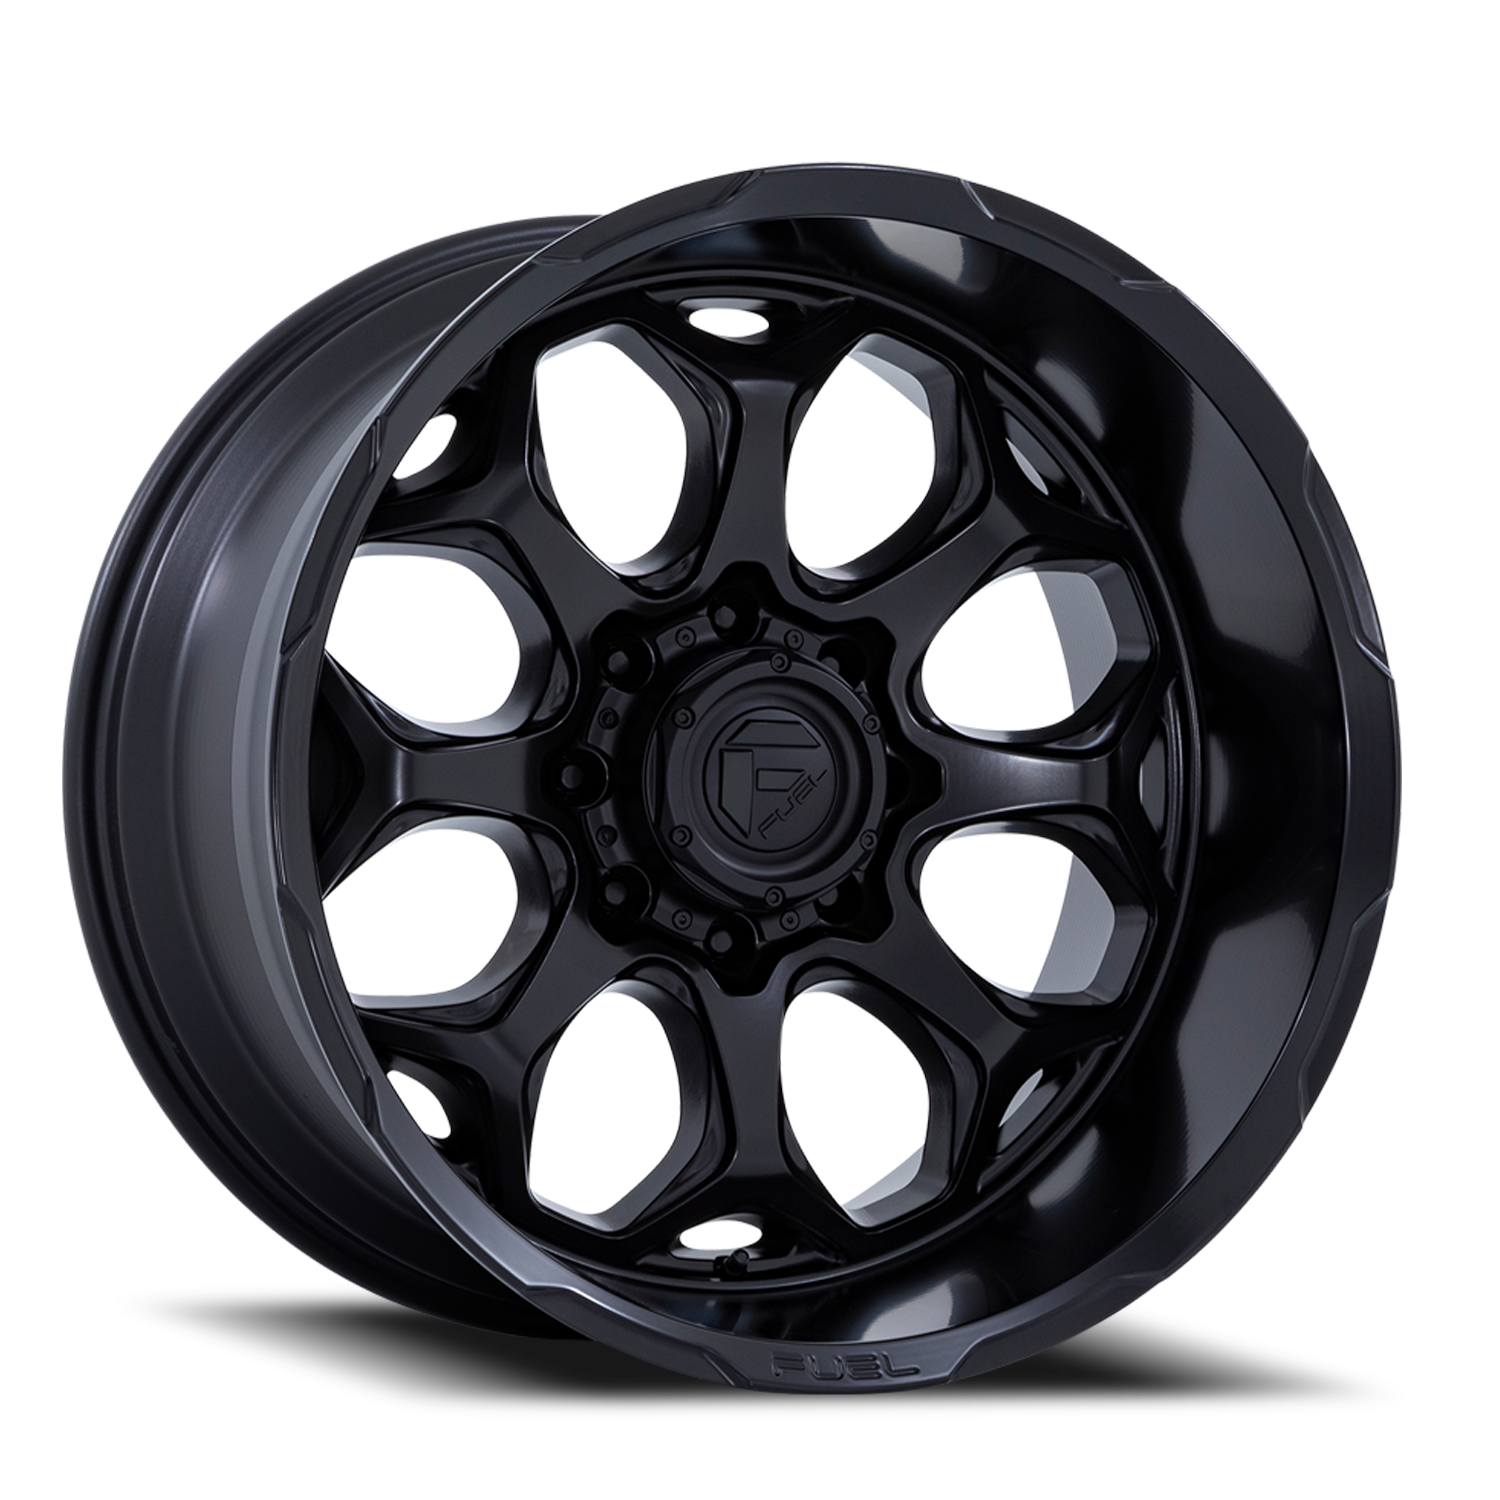 Aluminum Wheels 20X10 Scepter FC862 MX 5 On 127 Blackout 71.5 Bore -18 Offset Fuel Off Road Wheels